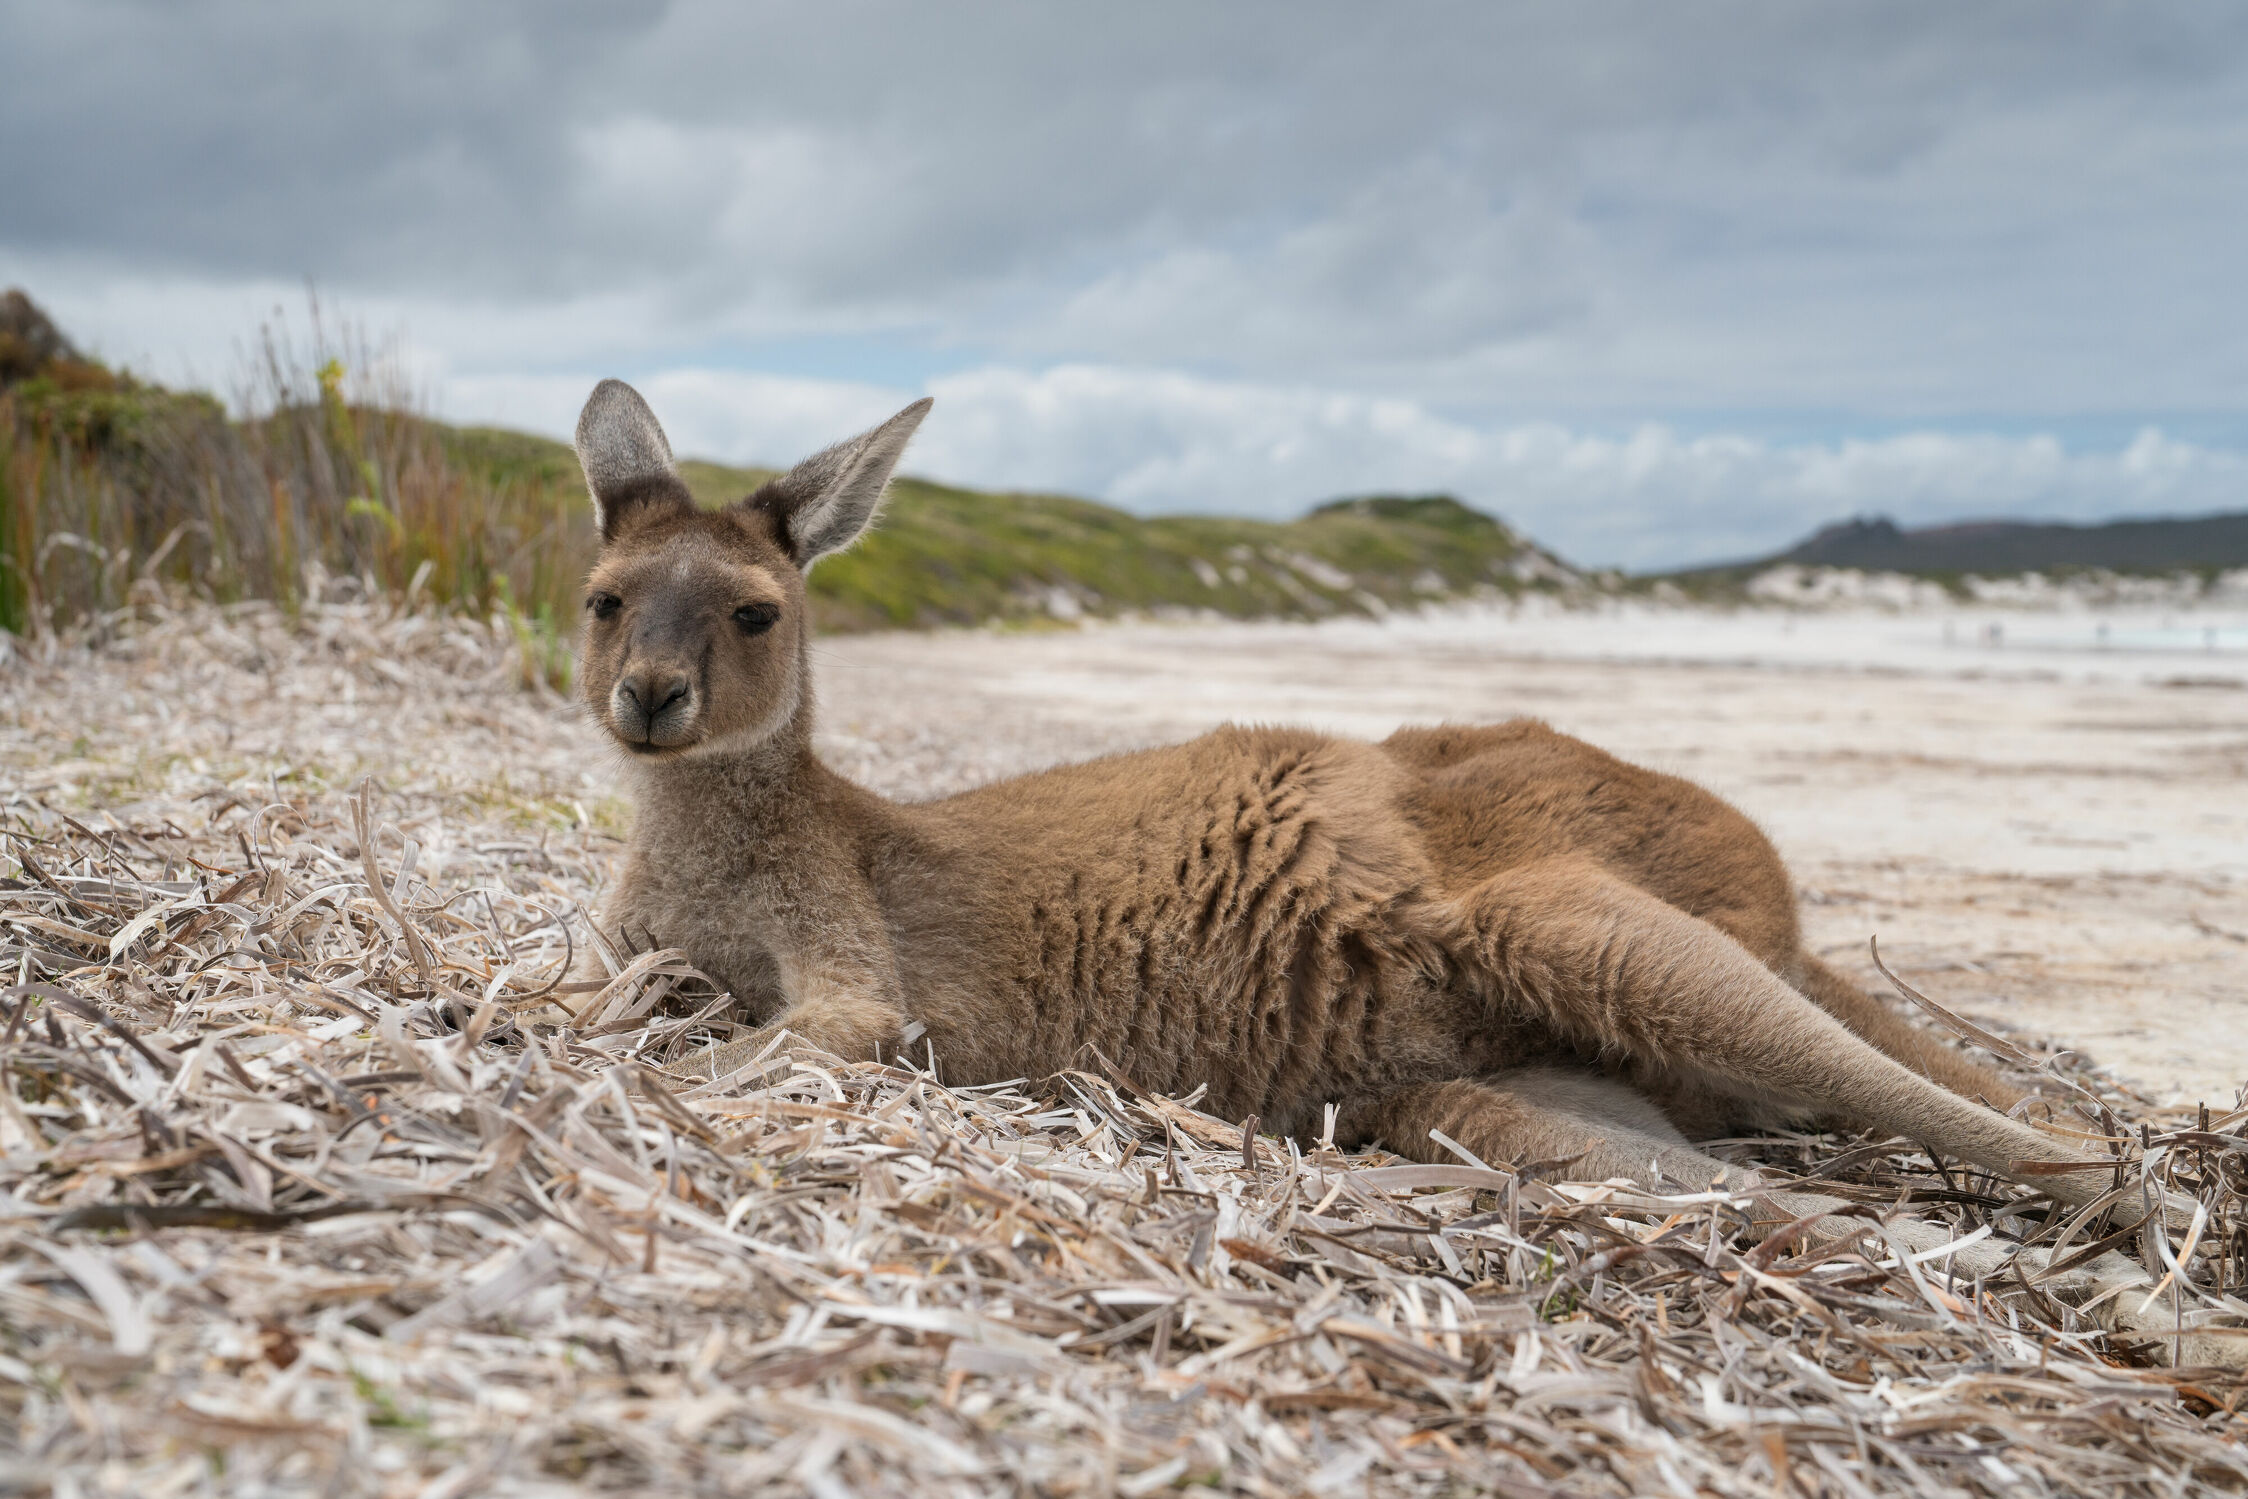 Bild mit Tiere, Säugetiere, Nationalparks, Strand, Fauna, Reisen, Australien, Känguru, Western Australia, Cape Le Grand